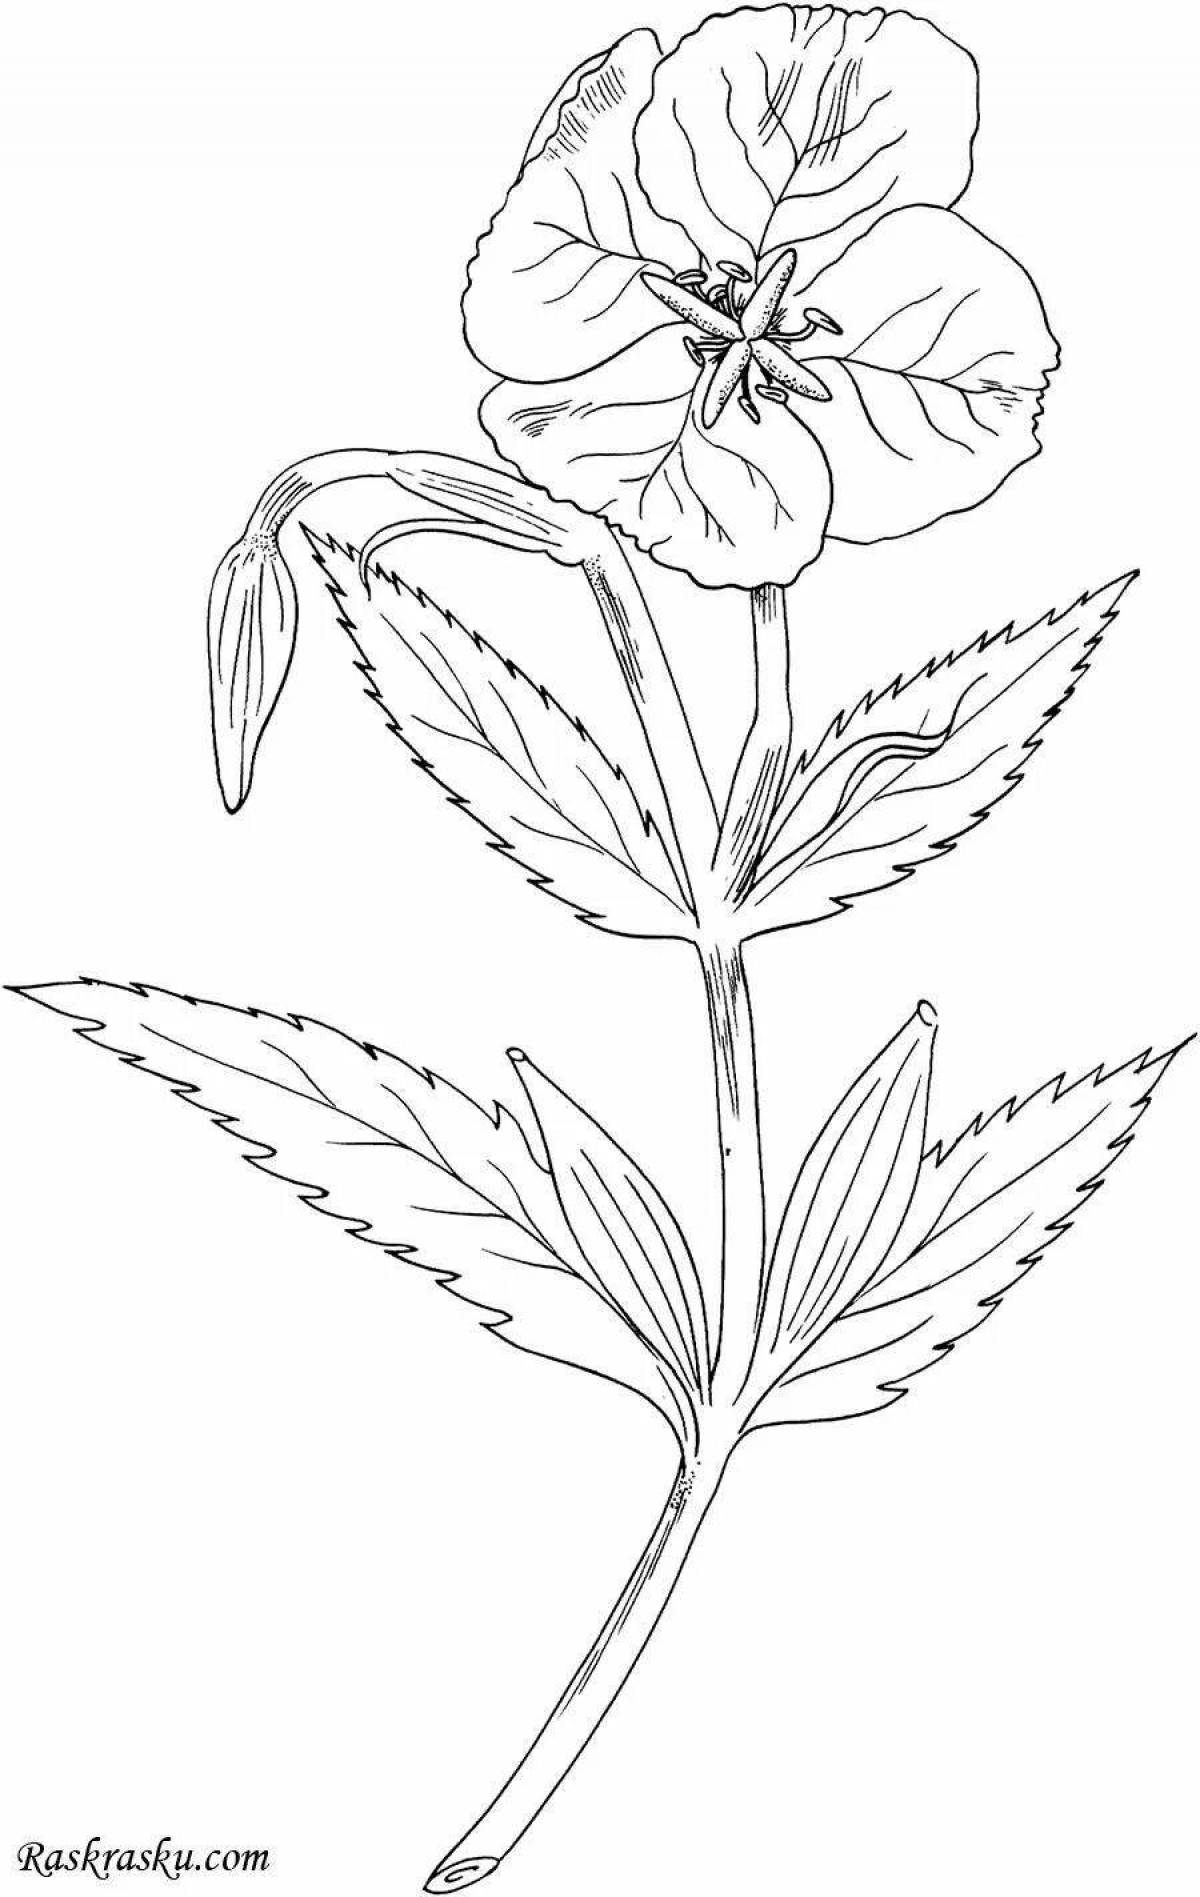 Coloring page beautiful primrose corydalis